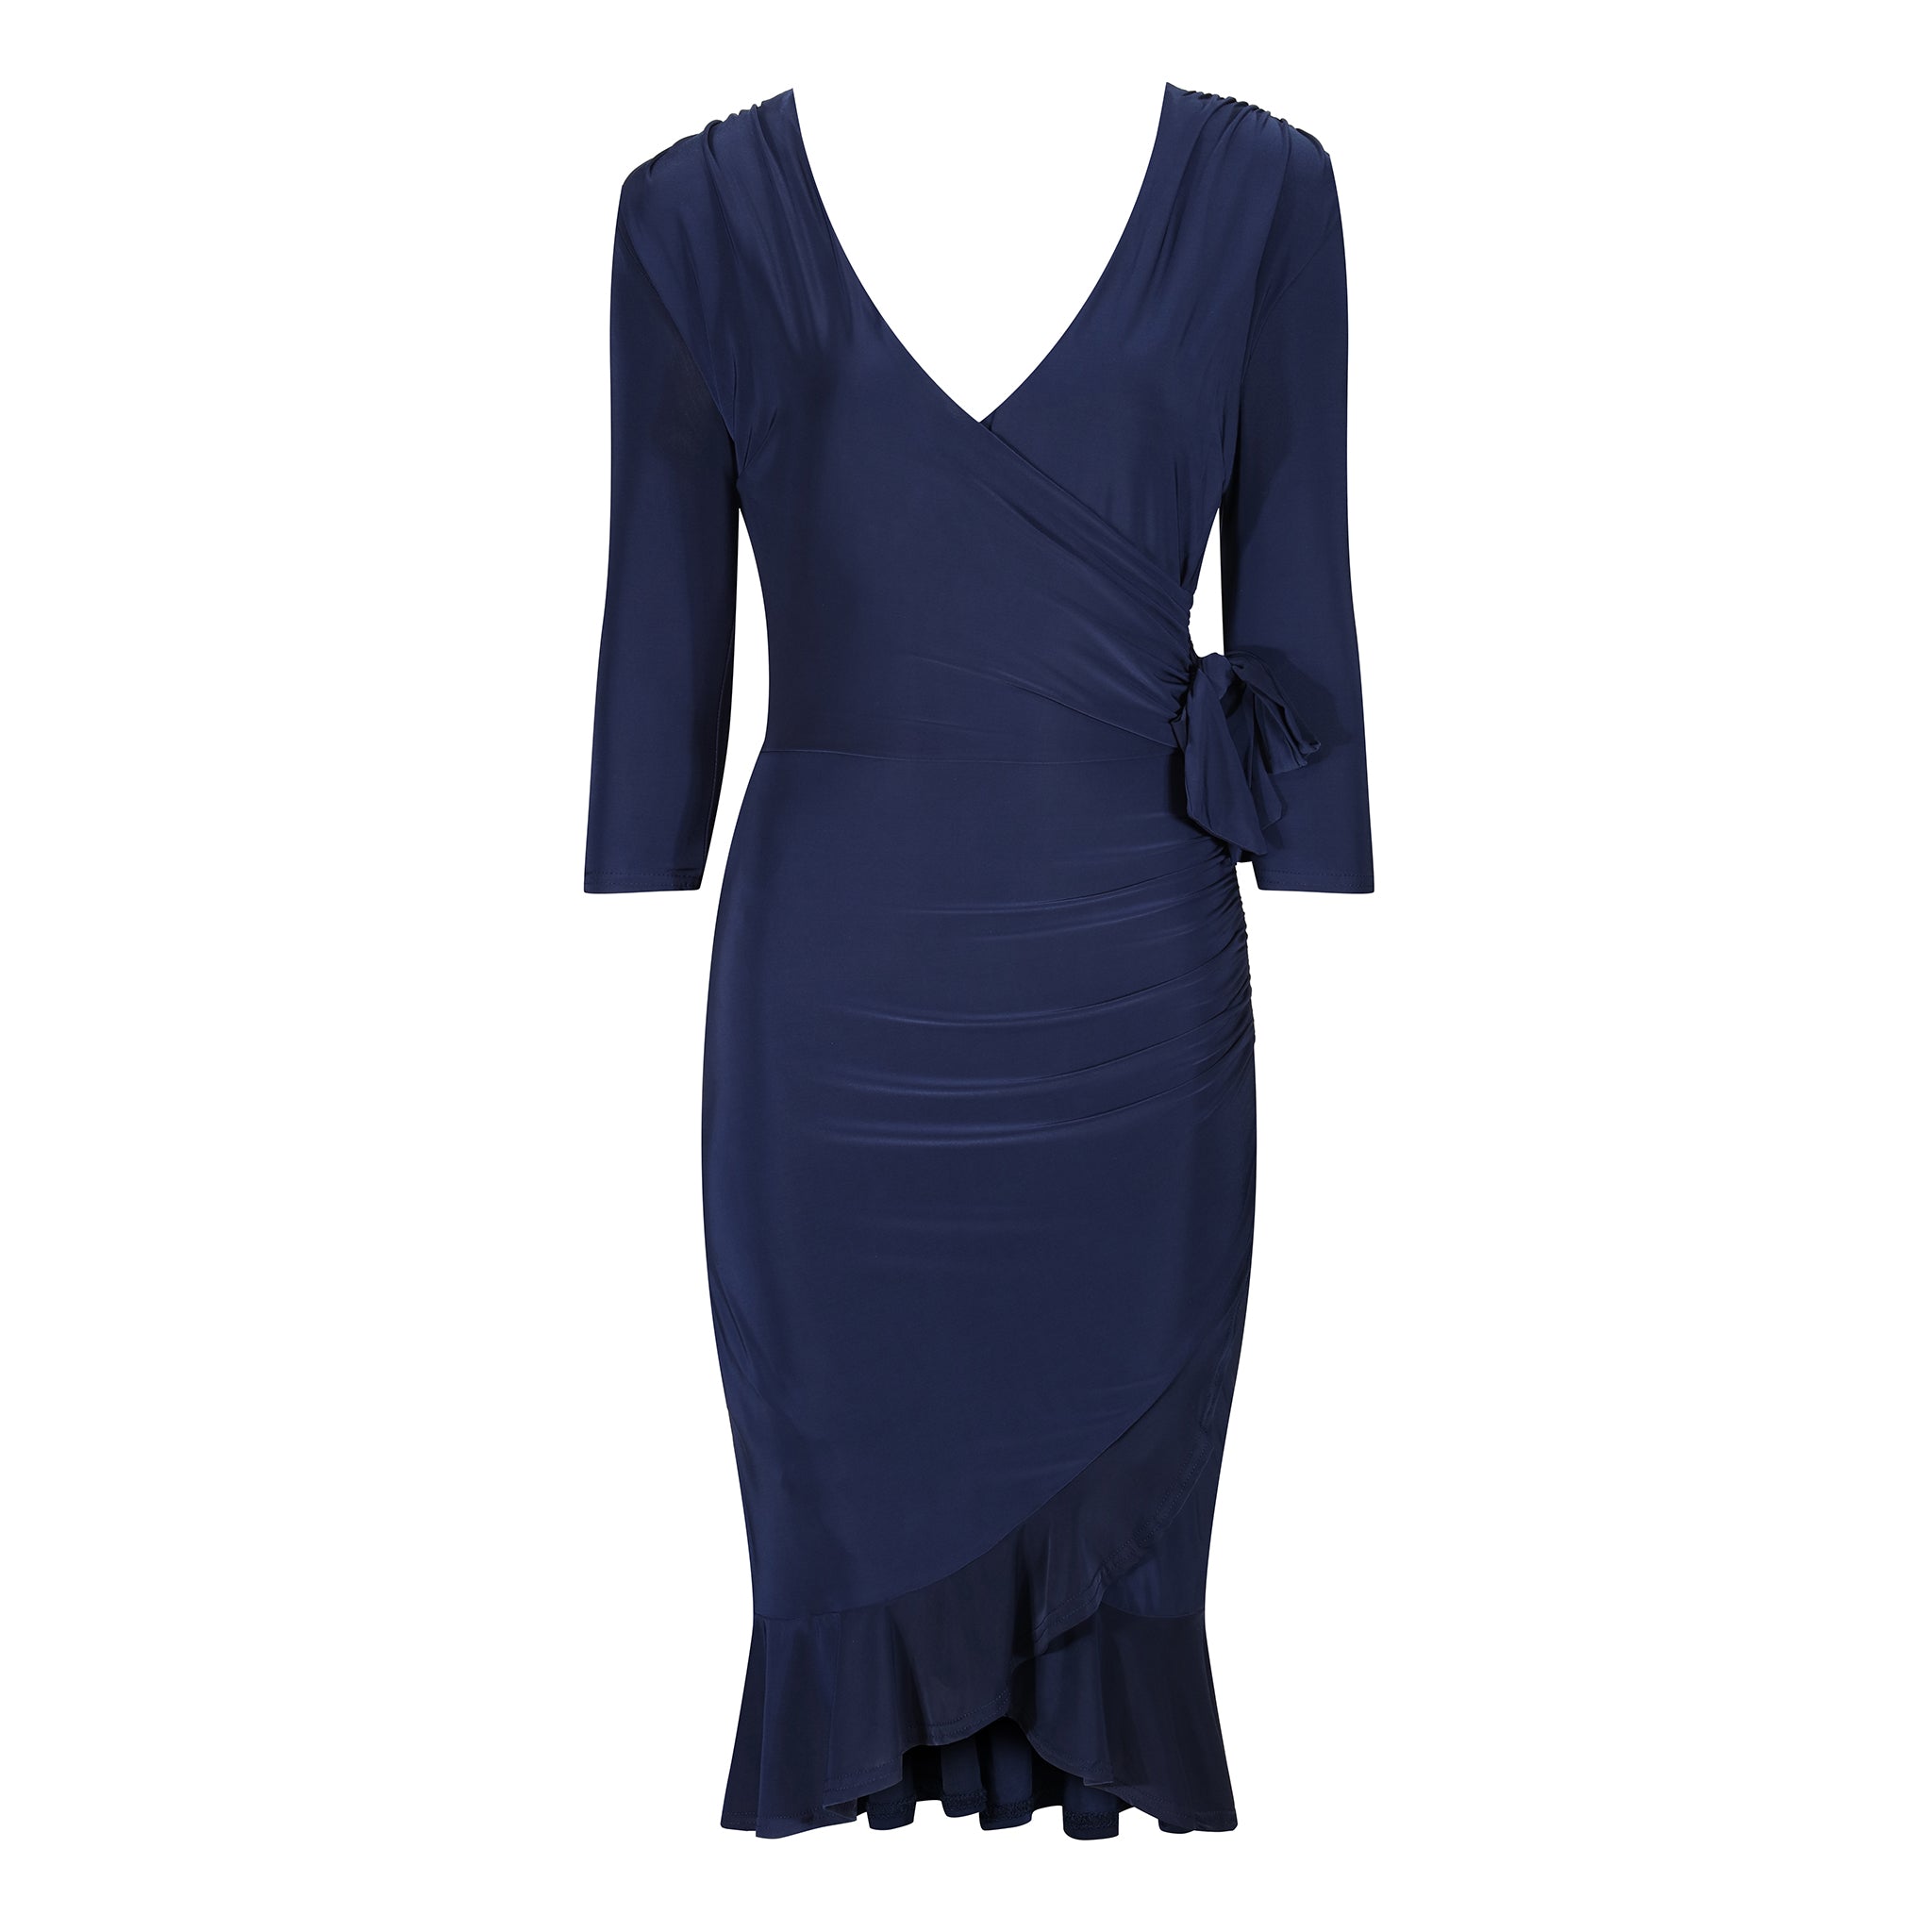 Navy Blue Wrap Effect Cocktail Dress w/ Waterfall Peplum Hem & 3/4 Sleeves